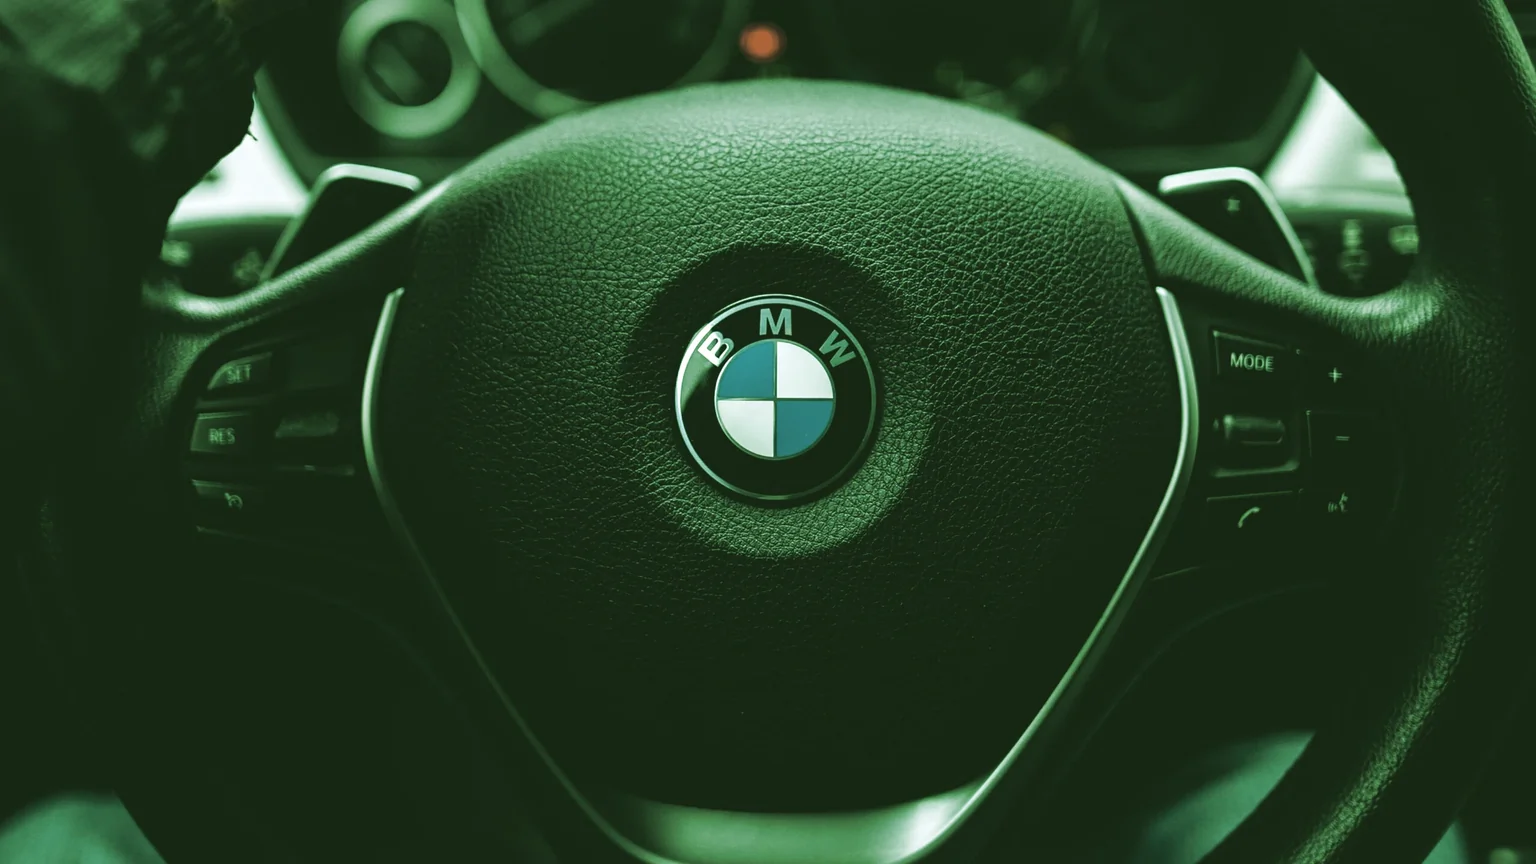 Steering wheel of a BMW car. Image: Unsplash